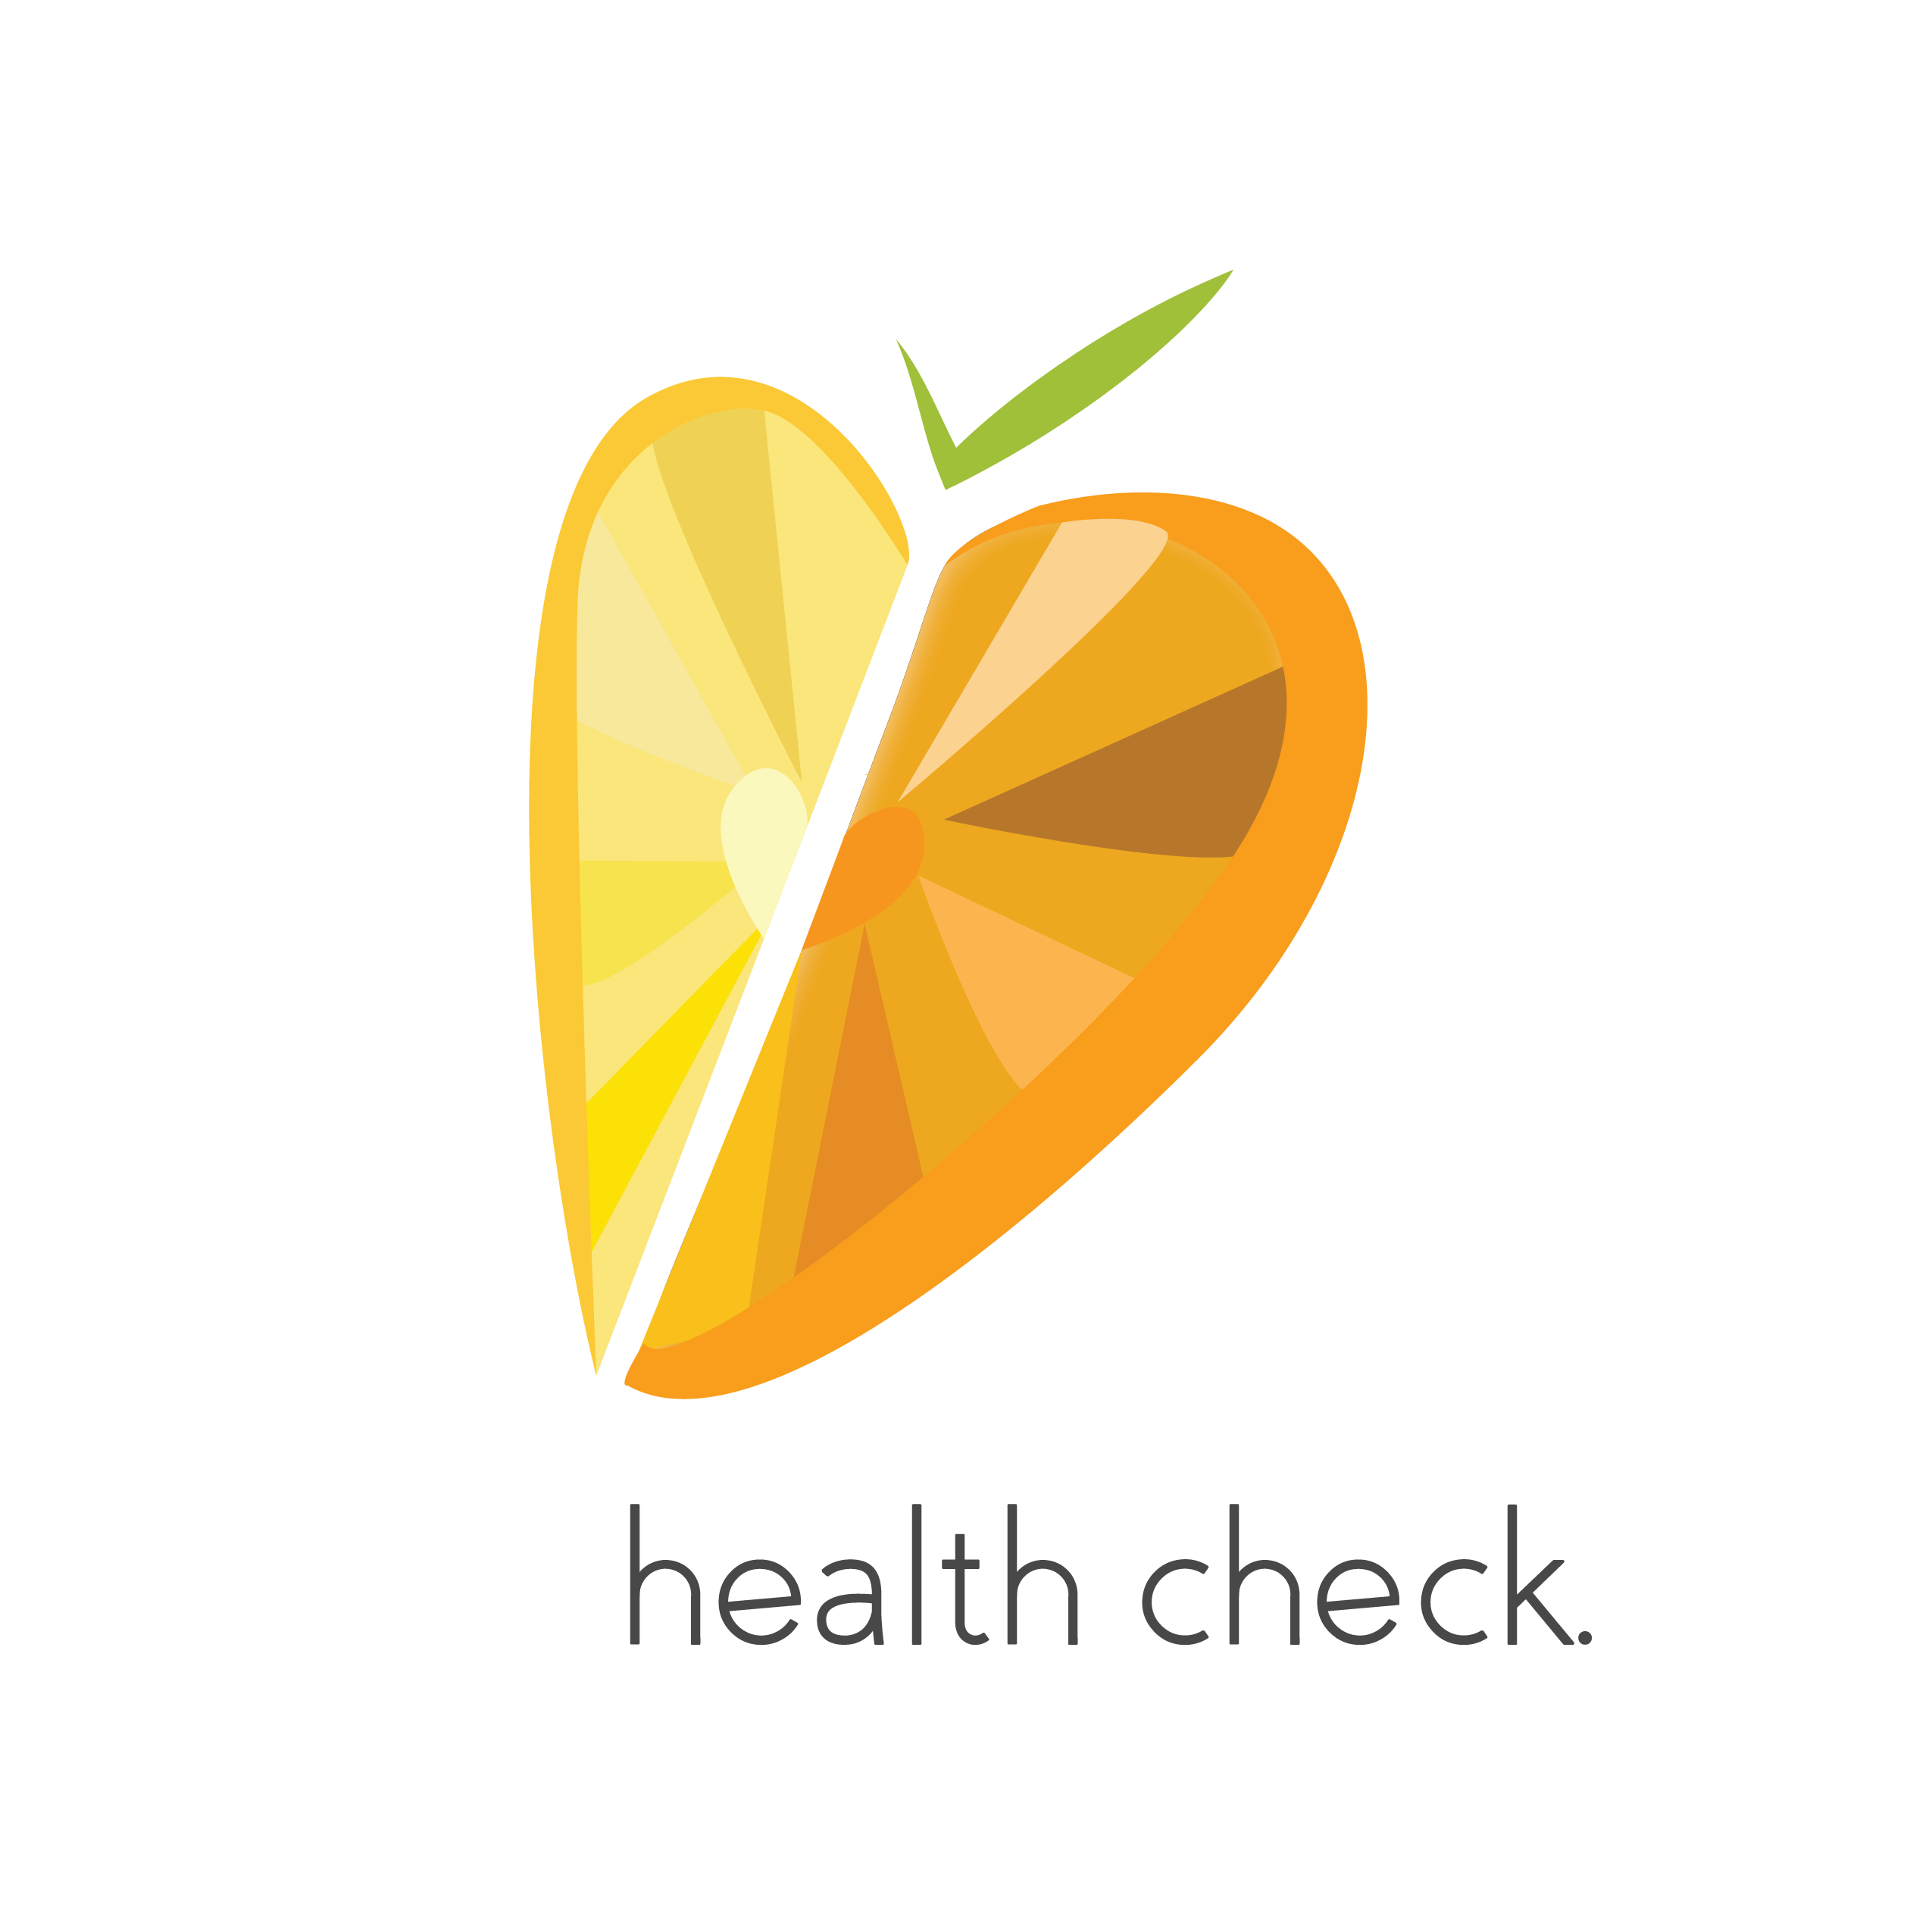 Heart logo , half a lemon , half an orange, with a checkmark as the stem. For a health food company 